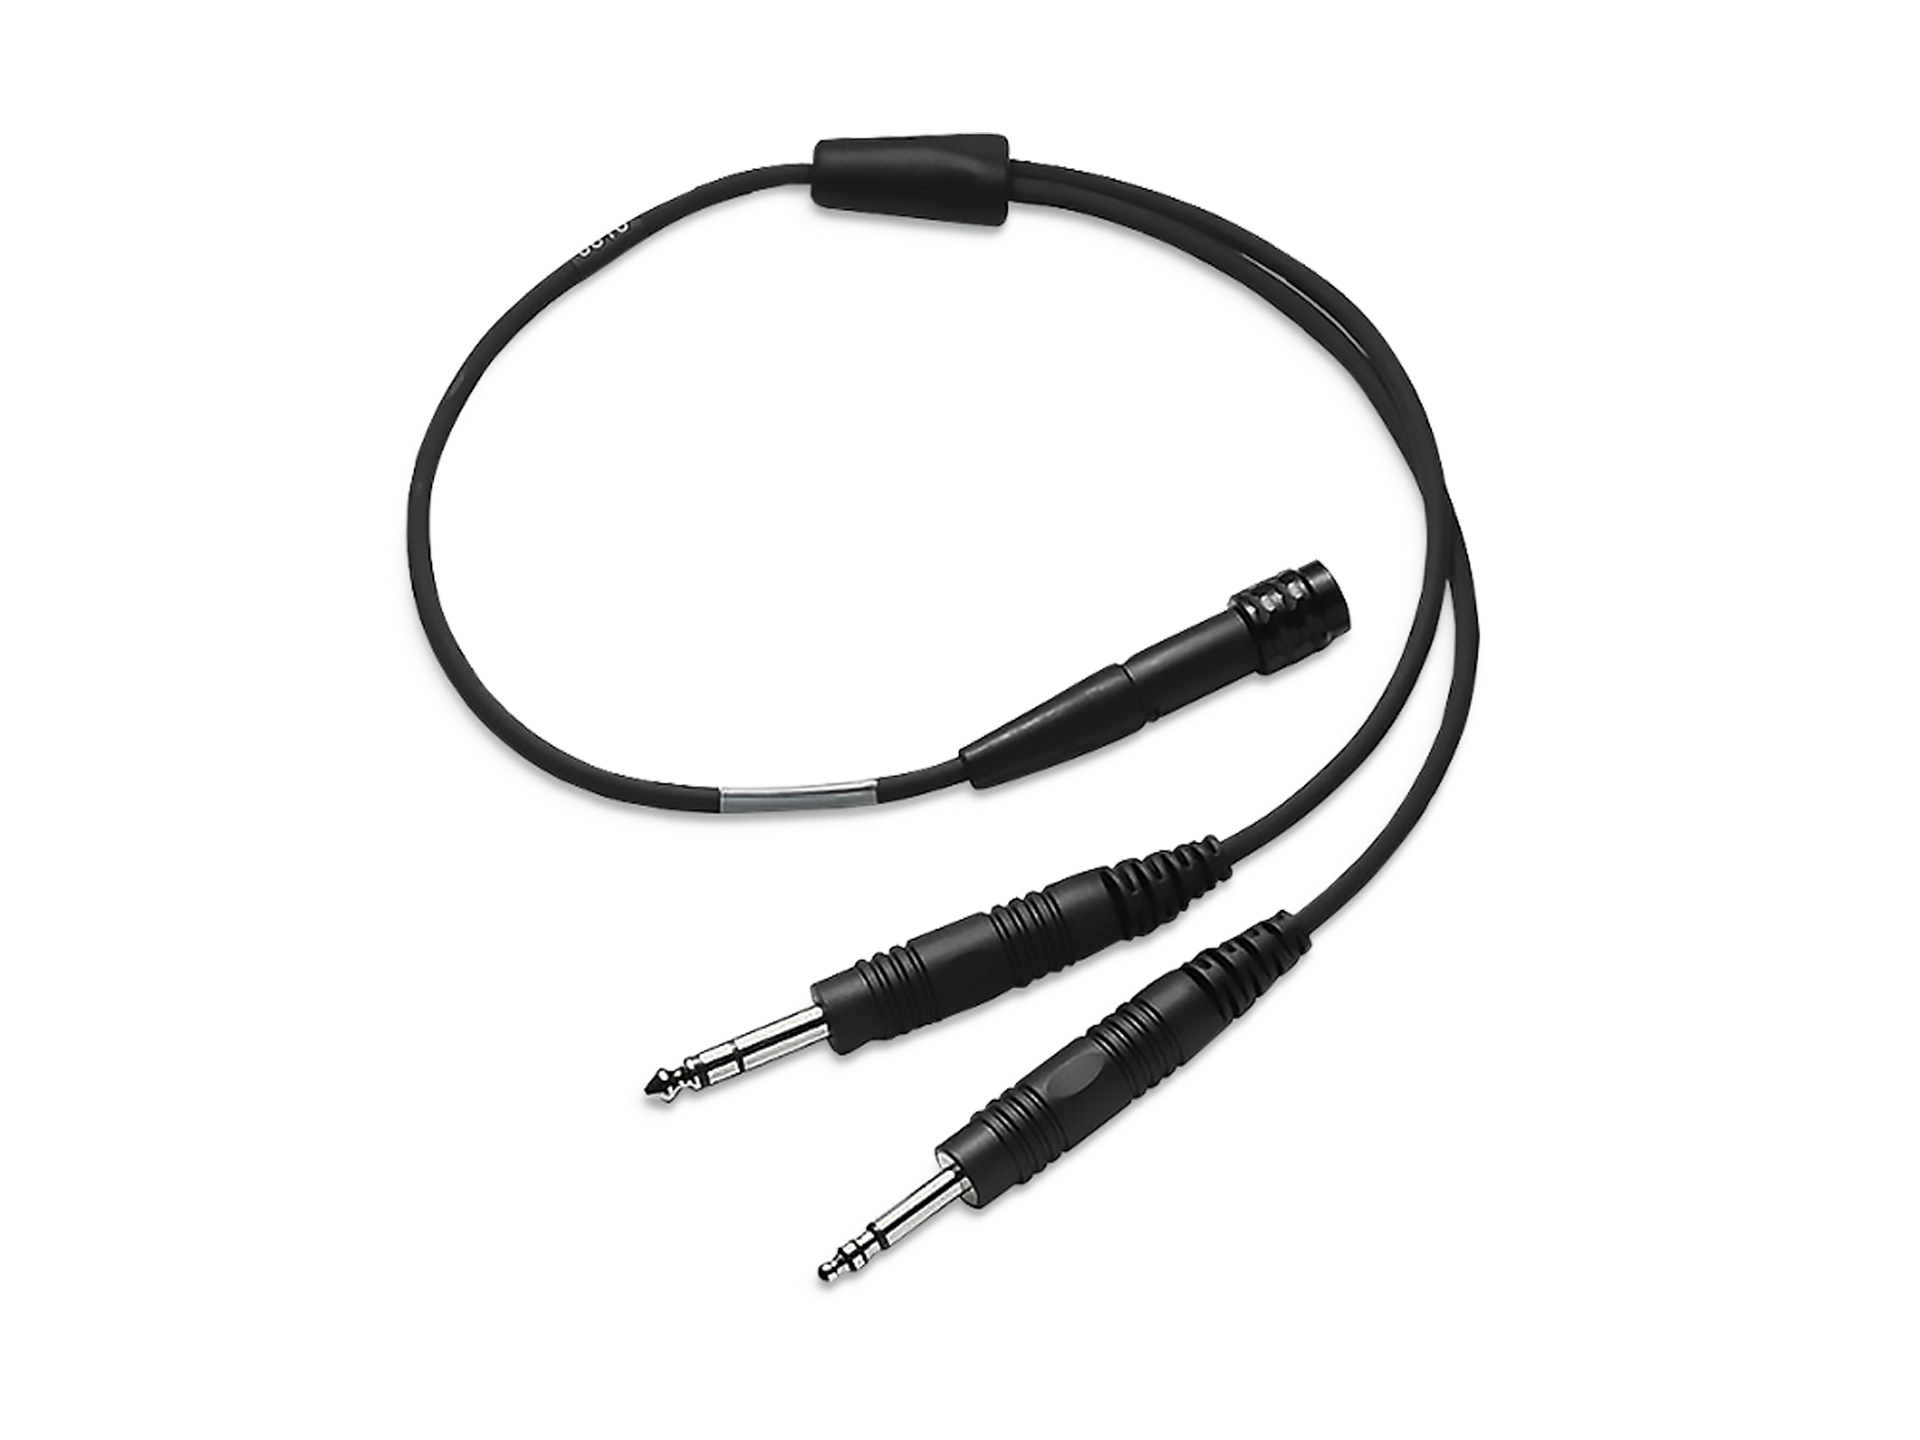 Bose A20 / A30 Headset 6-pin to Dual GA Plugs Adapter (327080-0010)Image Id:144817